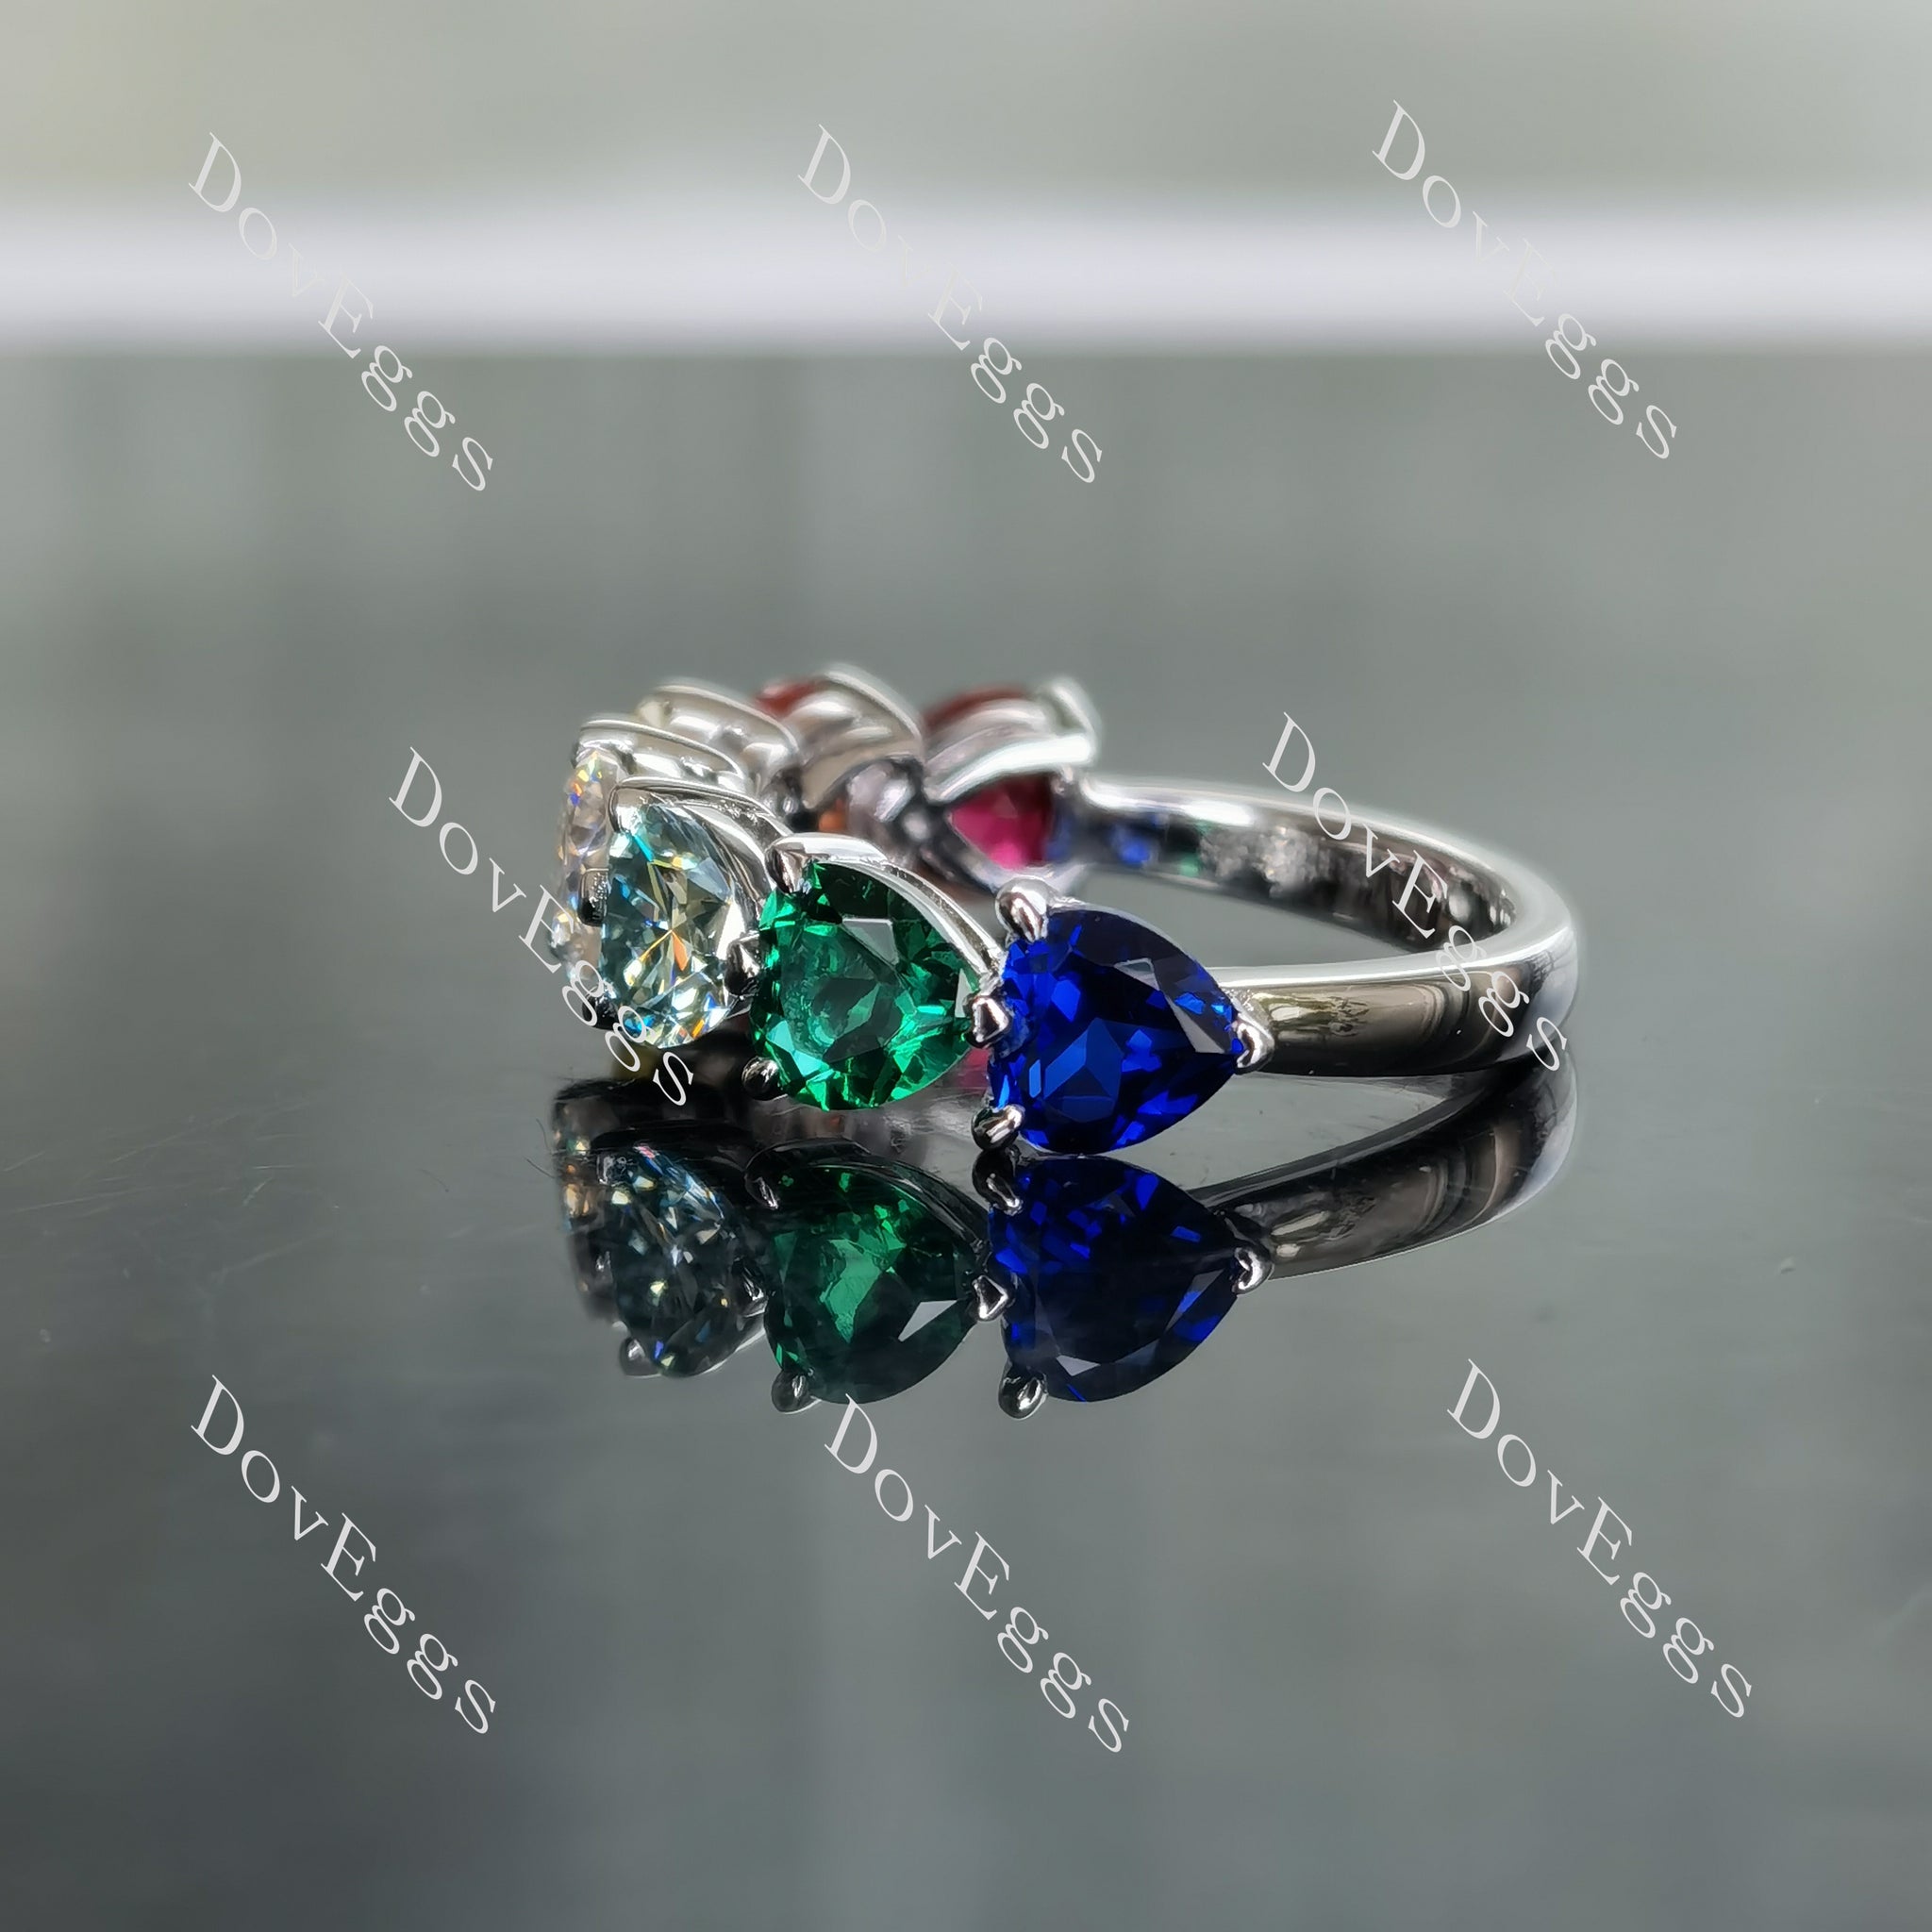 Doveggs ruby/orange-yellow sapphire/GHI-peacock blue moissanite/emerald/blue sapphire band-2.5mm band width